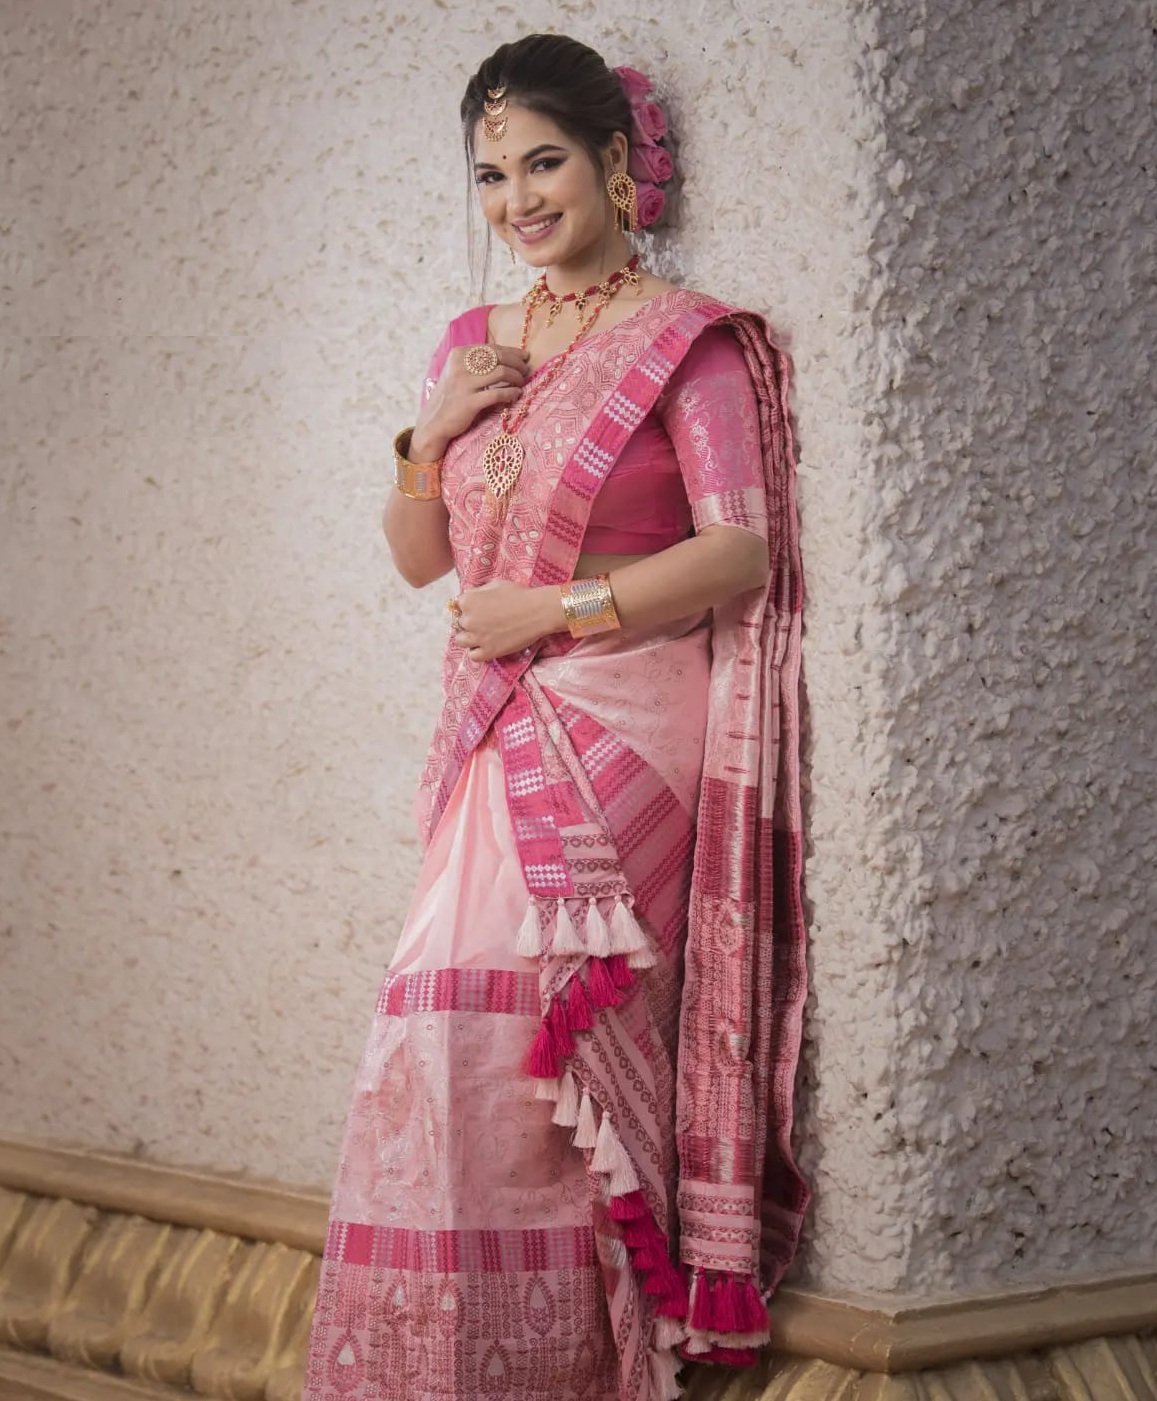 dipsikhabarbiee 📷@dipran_jan #northeastyle #stayfashionablytraditional # assam #mekhelachadar | Traditional indian dress, East fashion, Indian girls